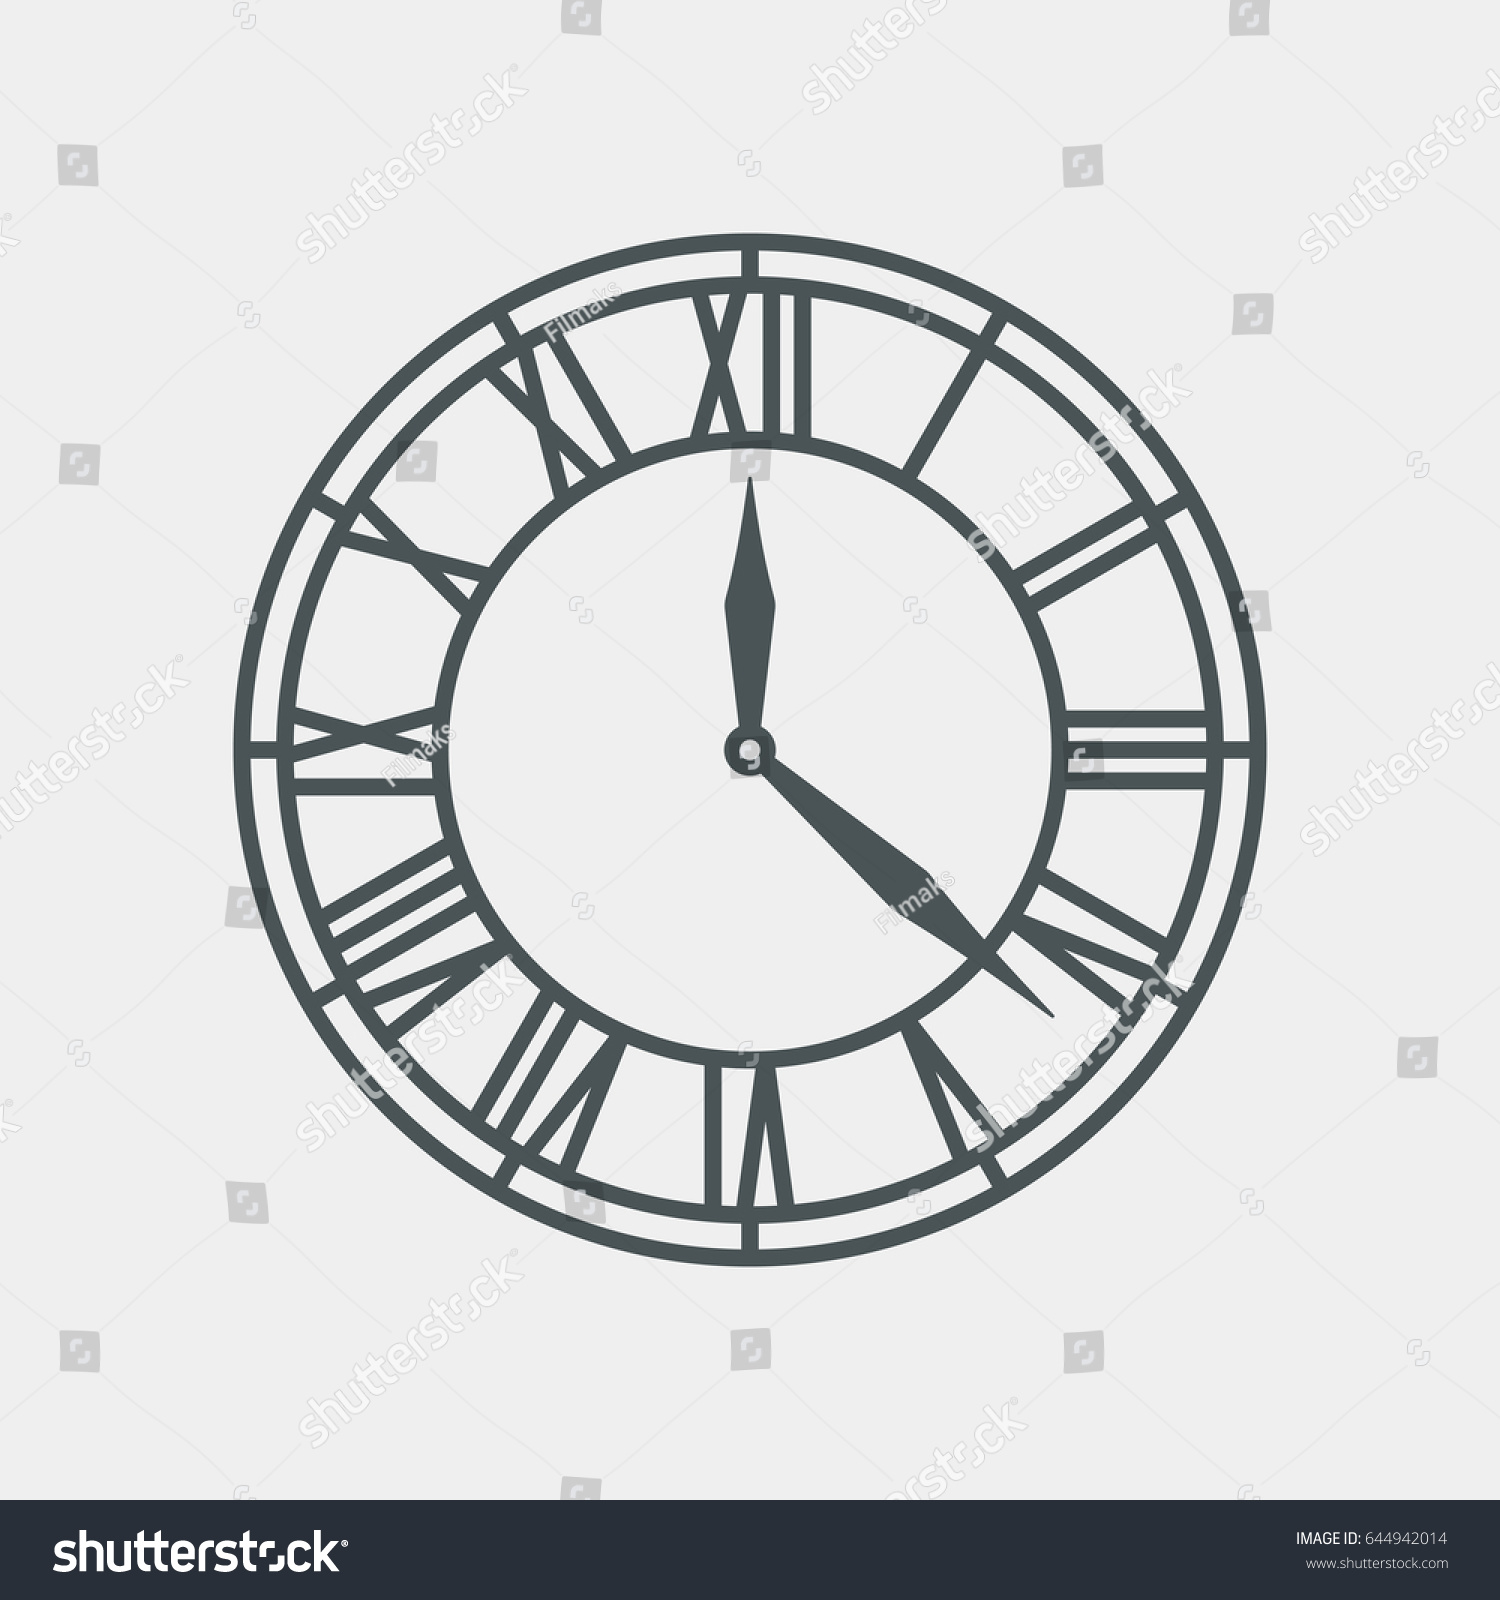 SVG of Vintage Roman clock, vector illustration svg